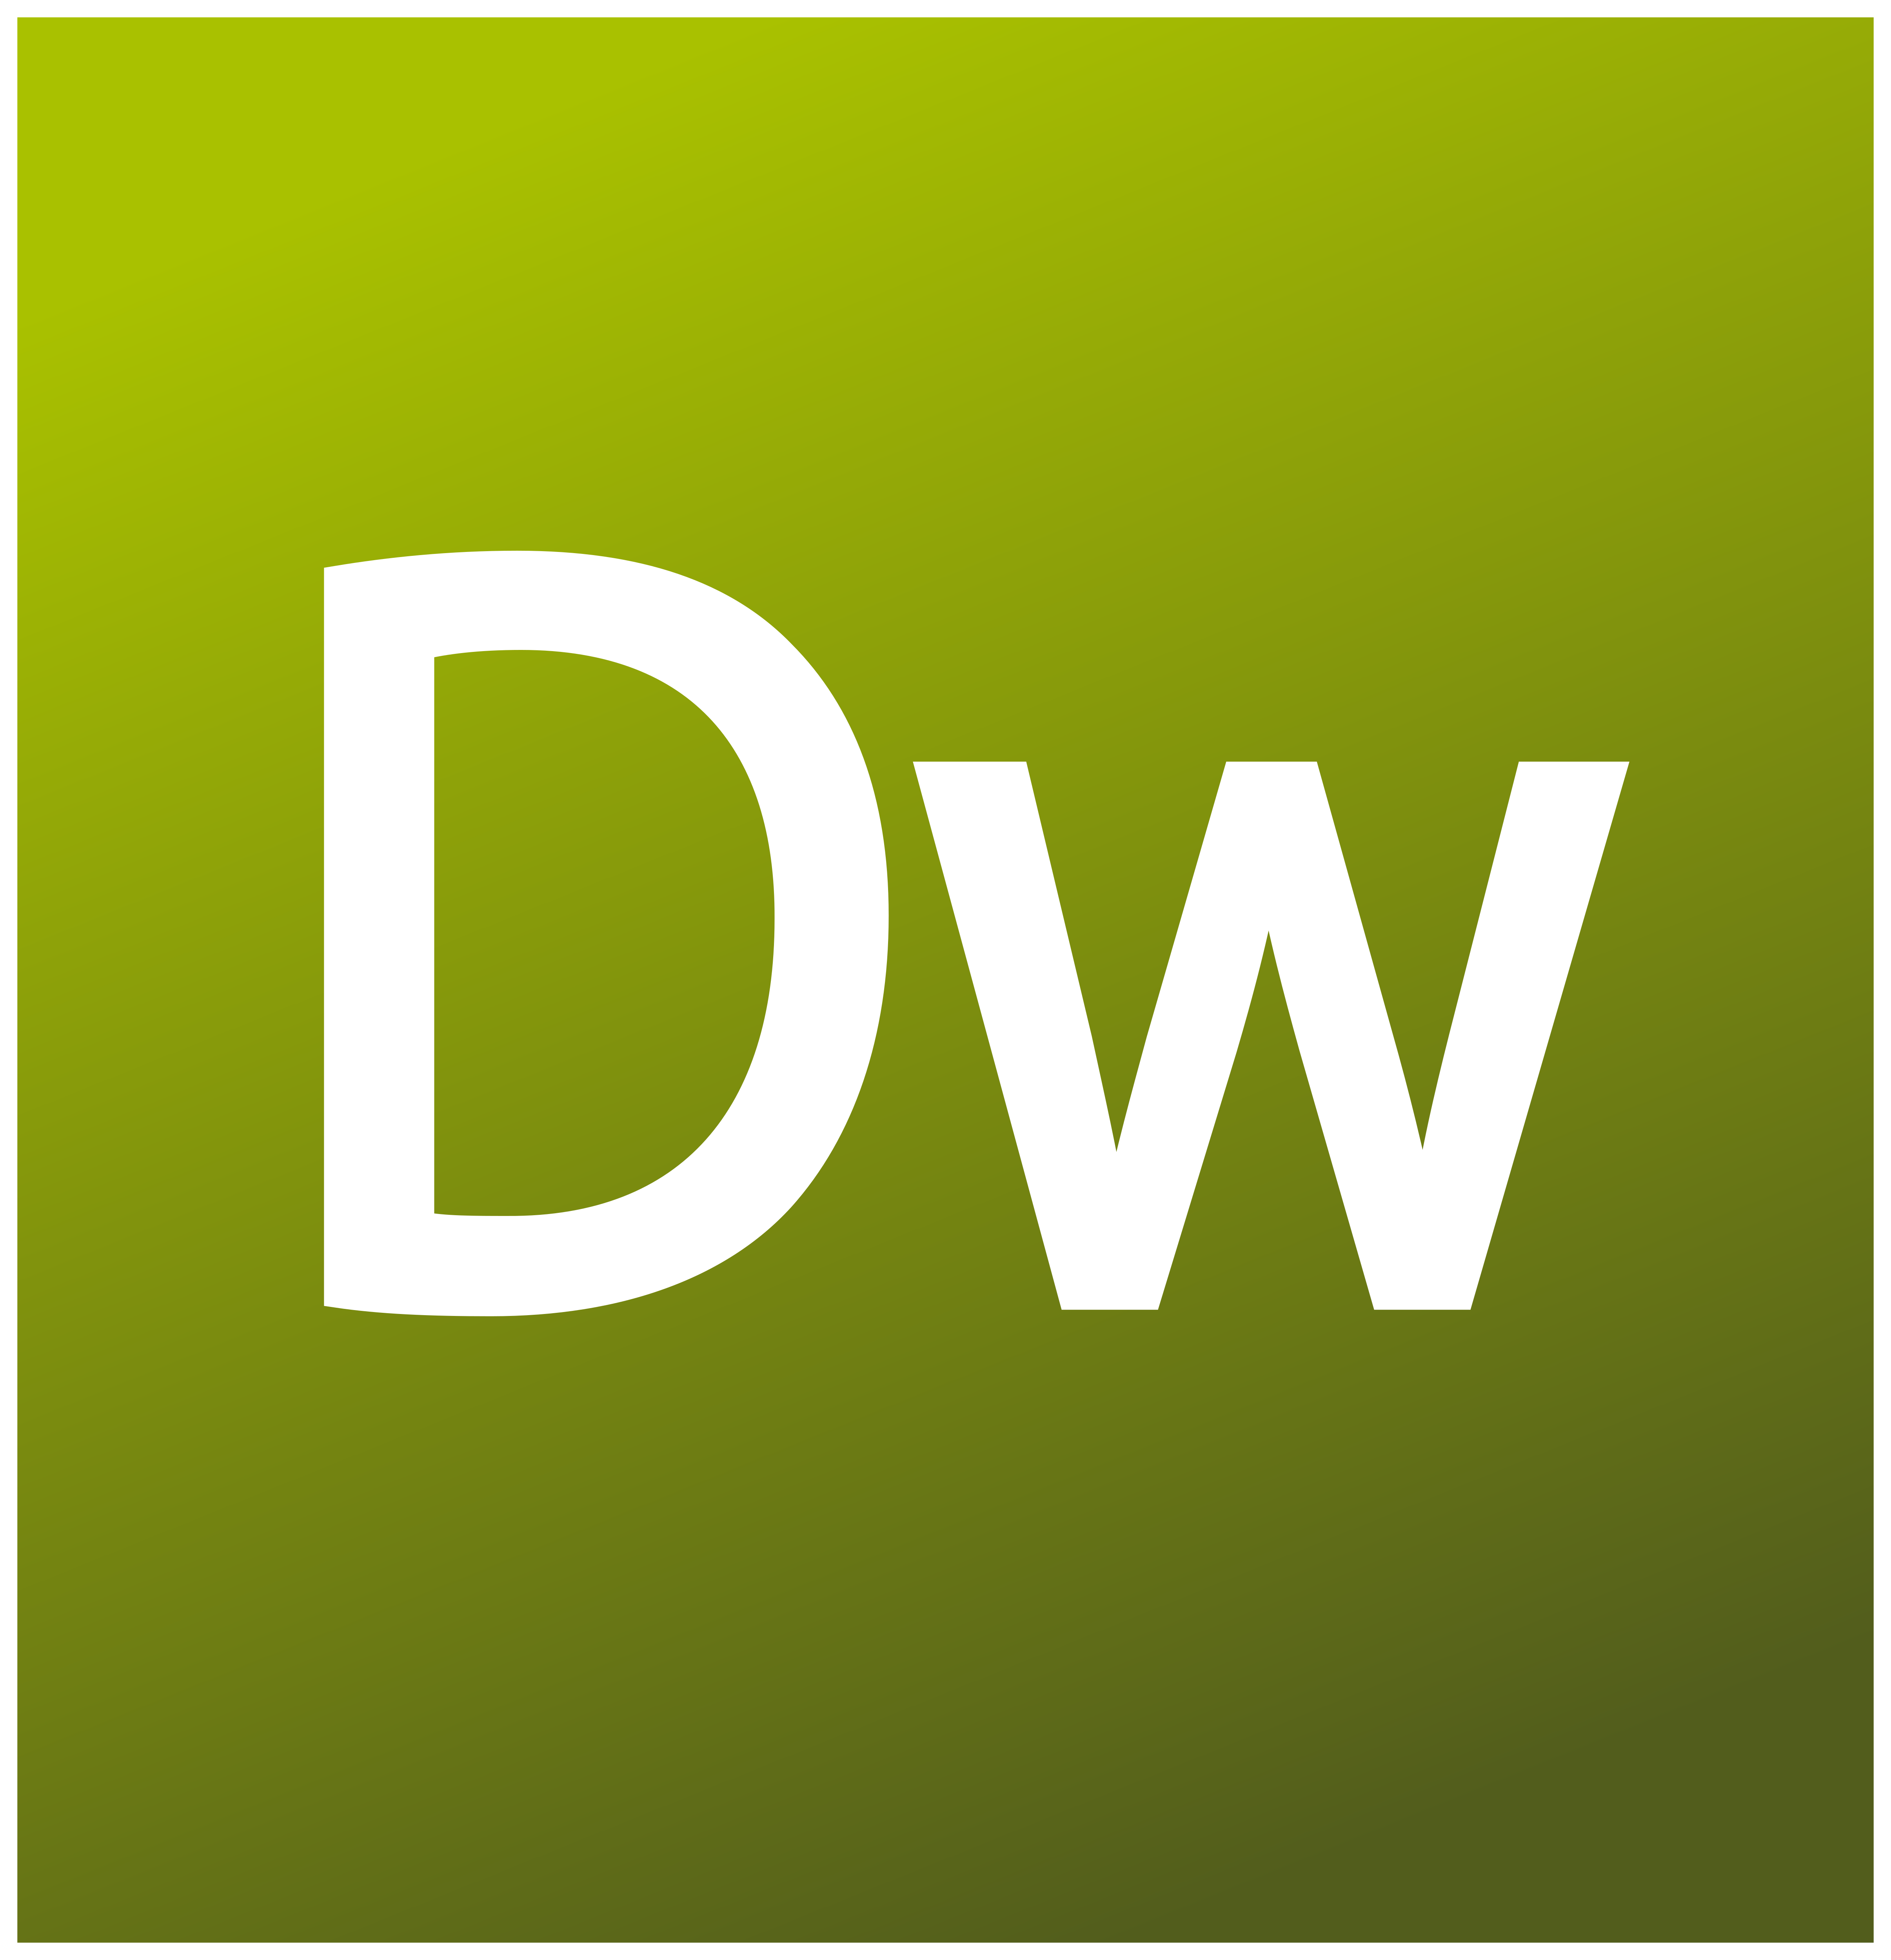 Adobe Dreamweaver Logos Download